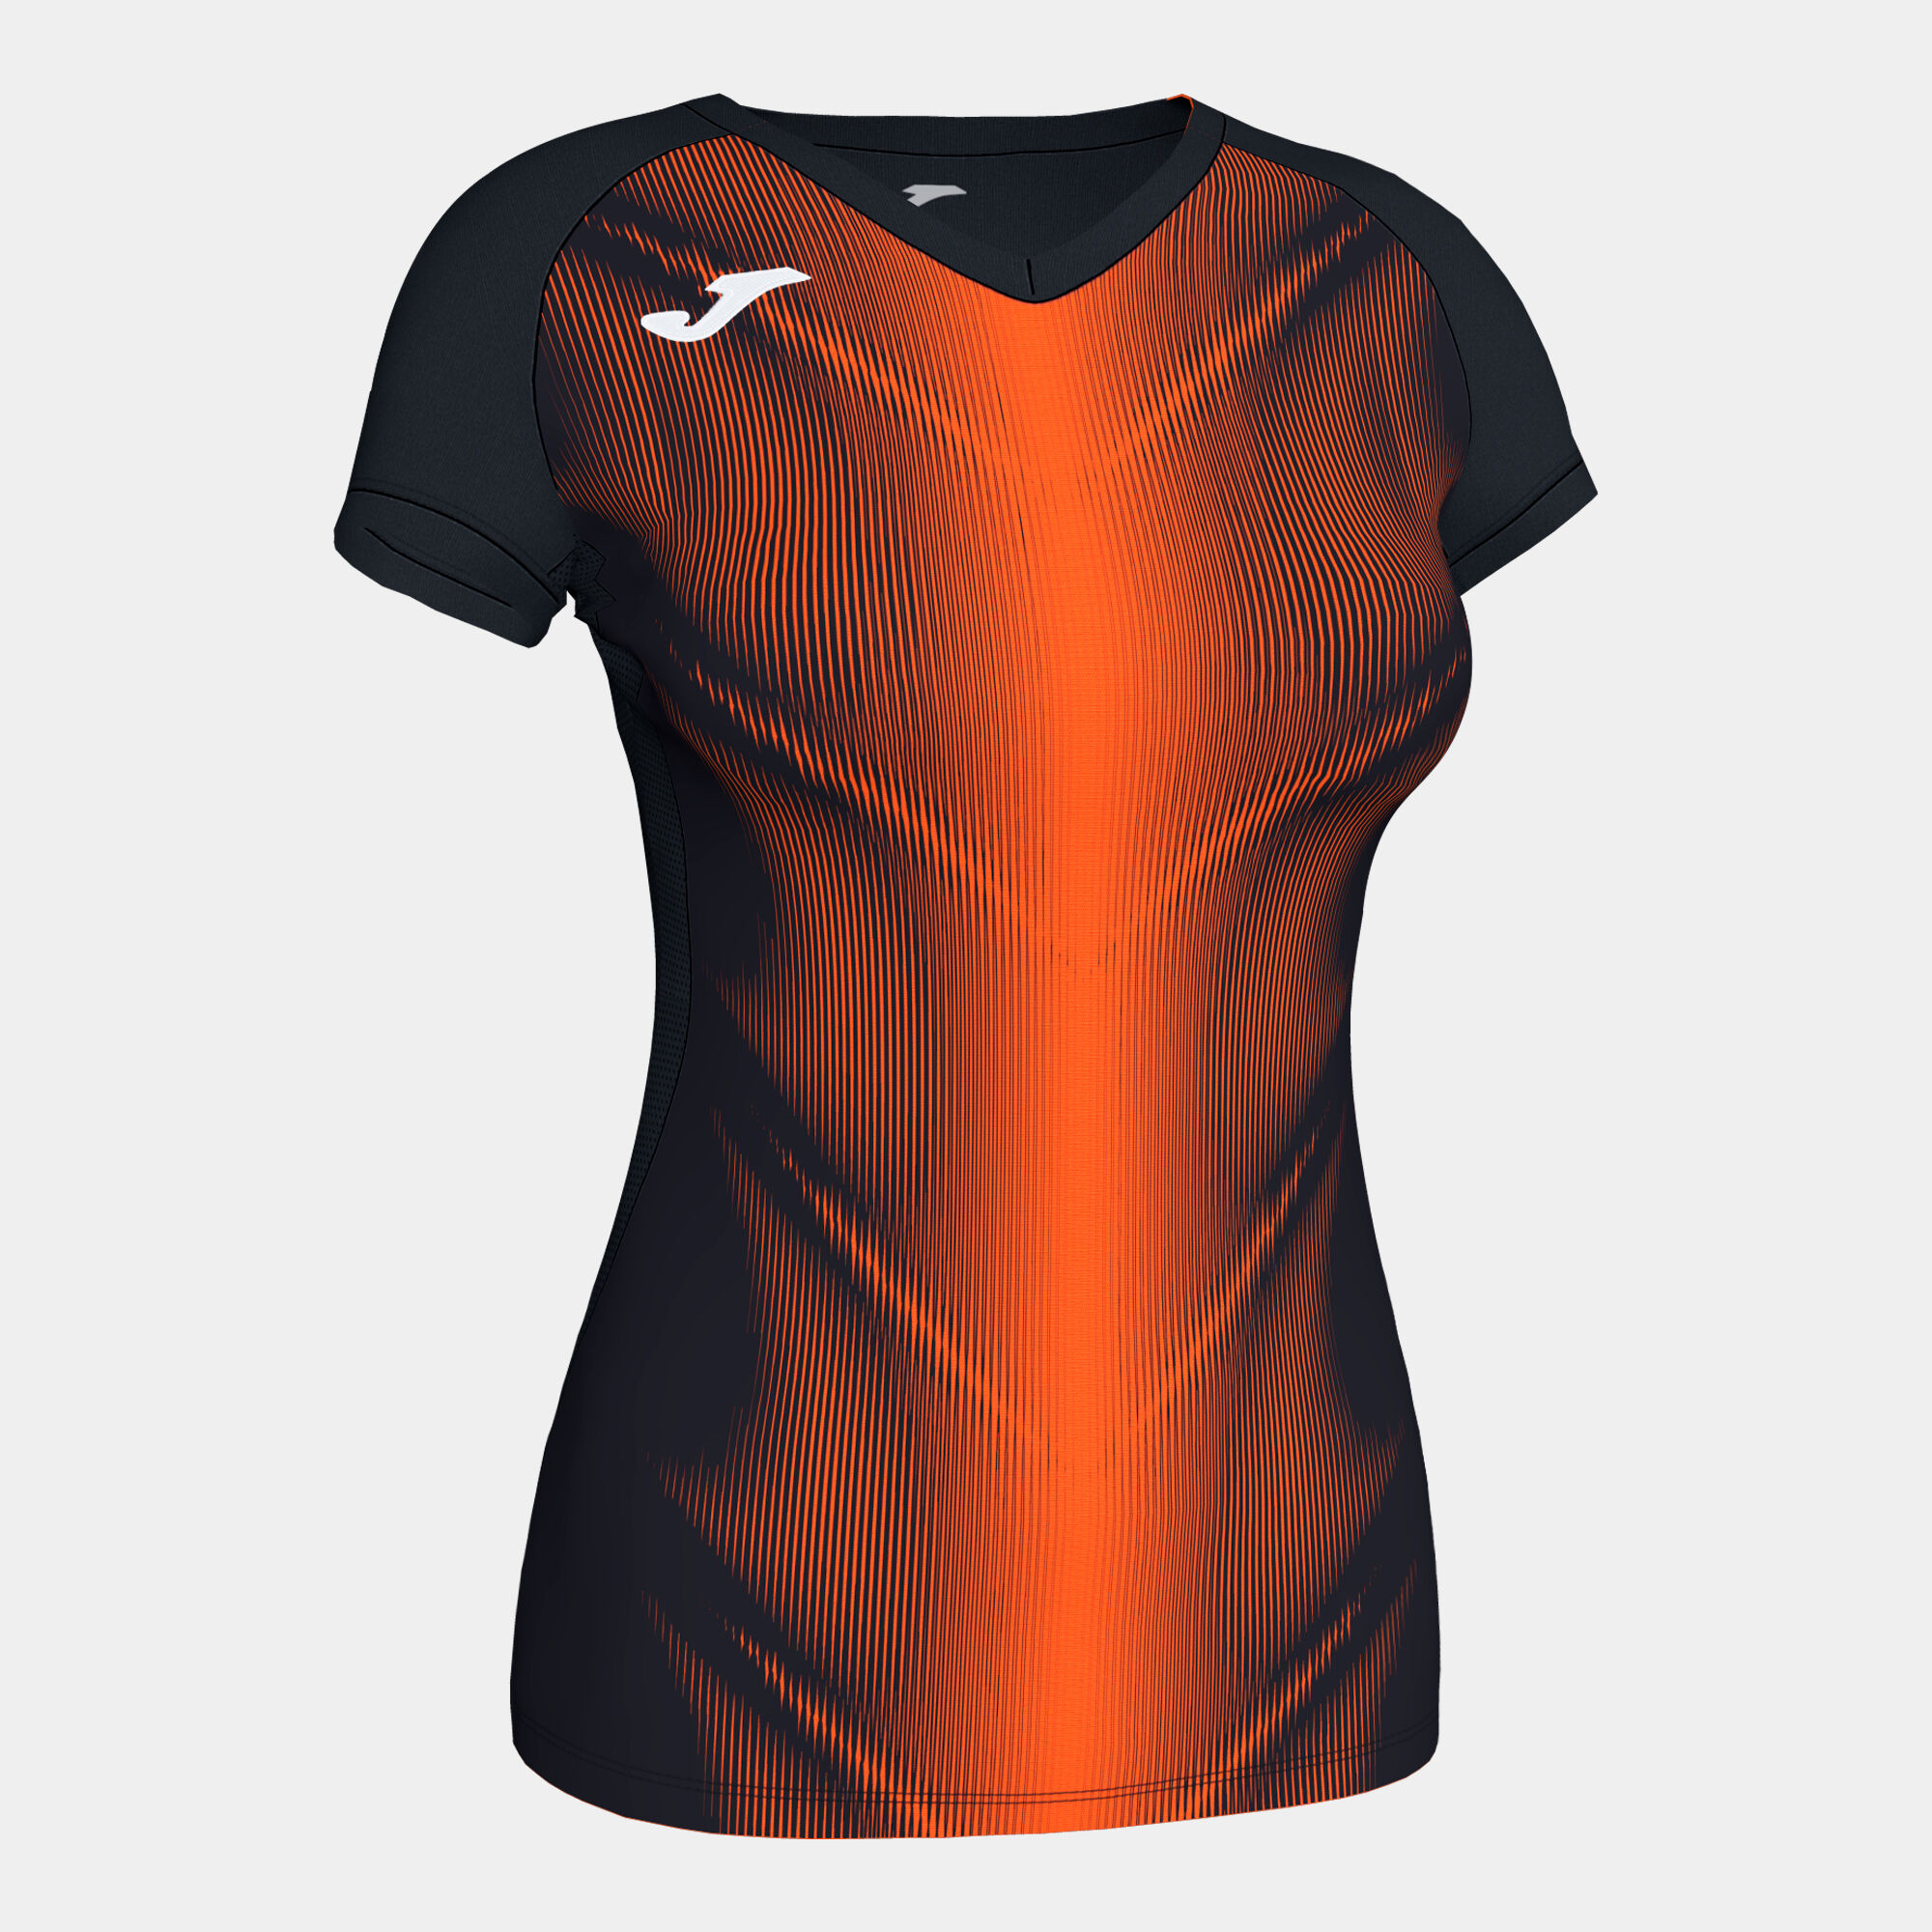 Camiseta manga corta mujer Olimpia negro naranja